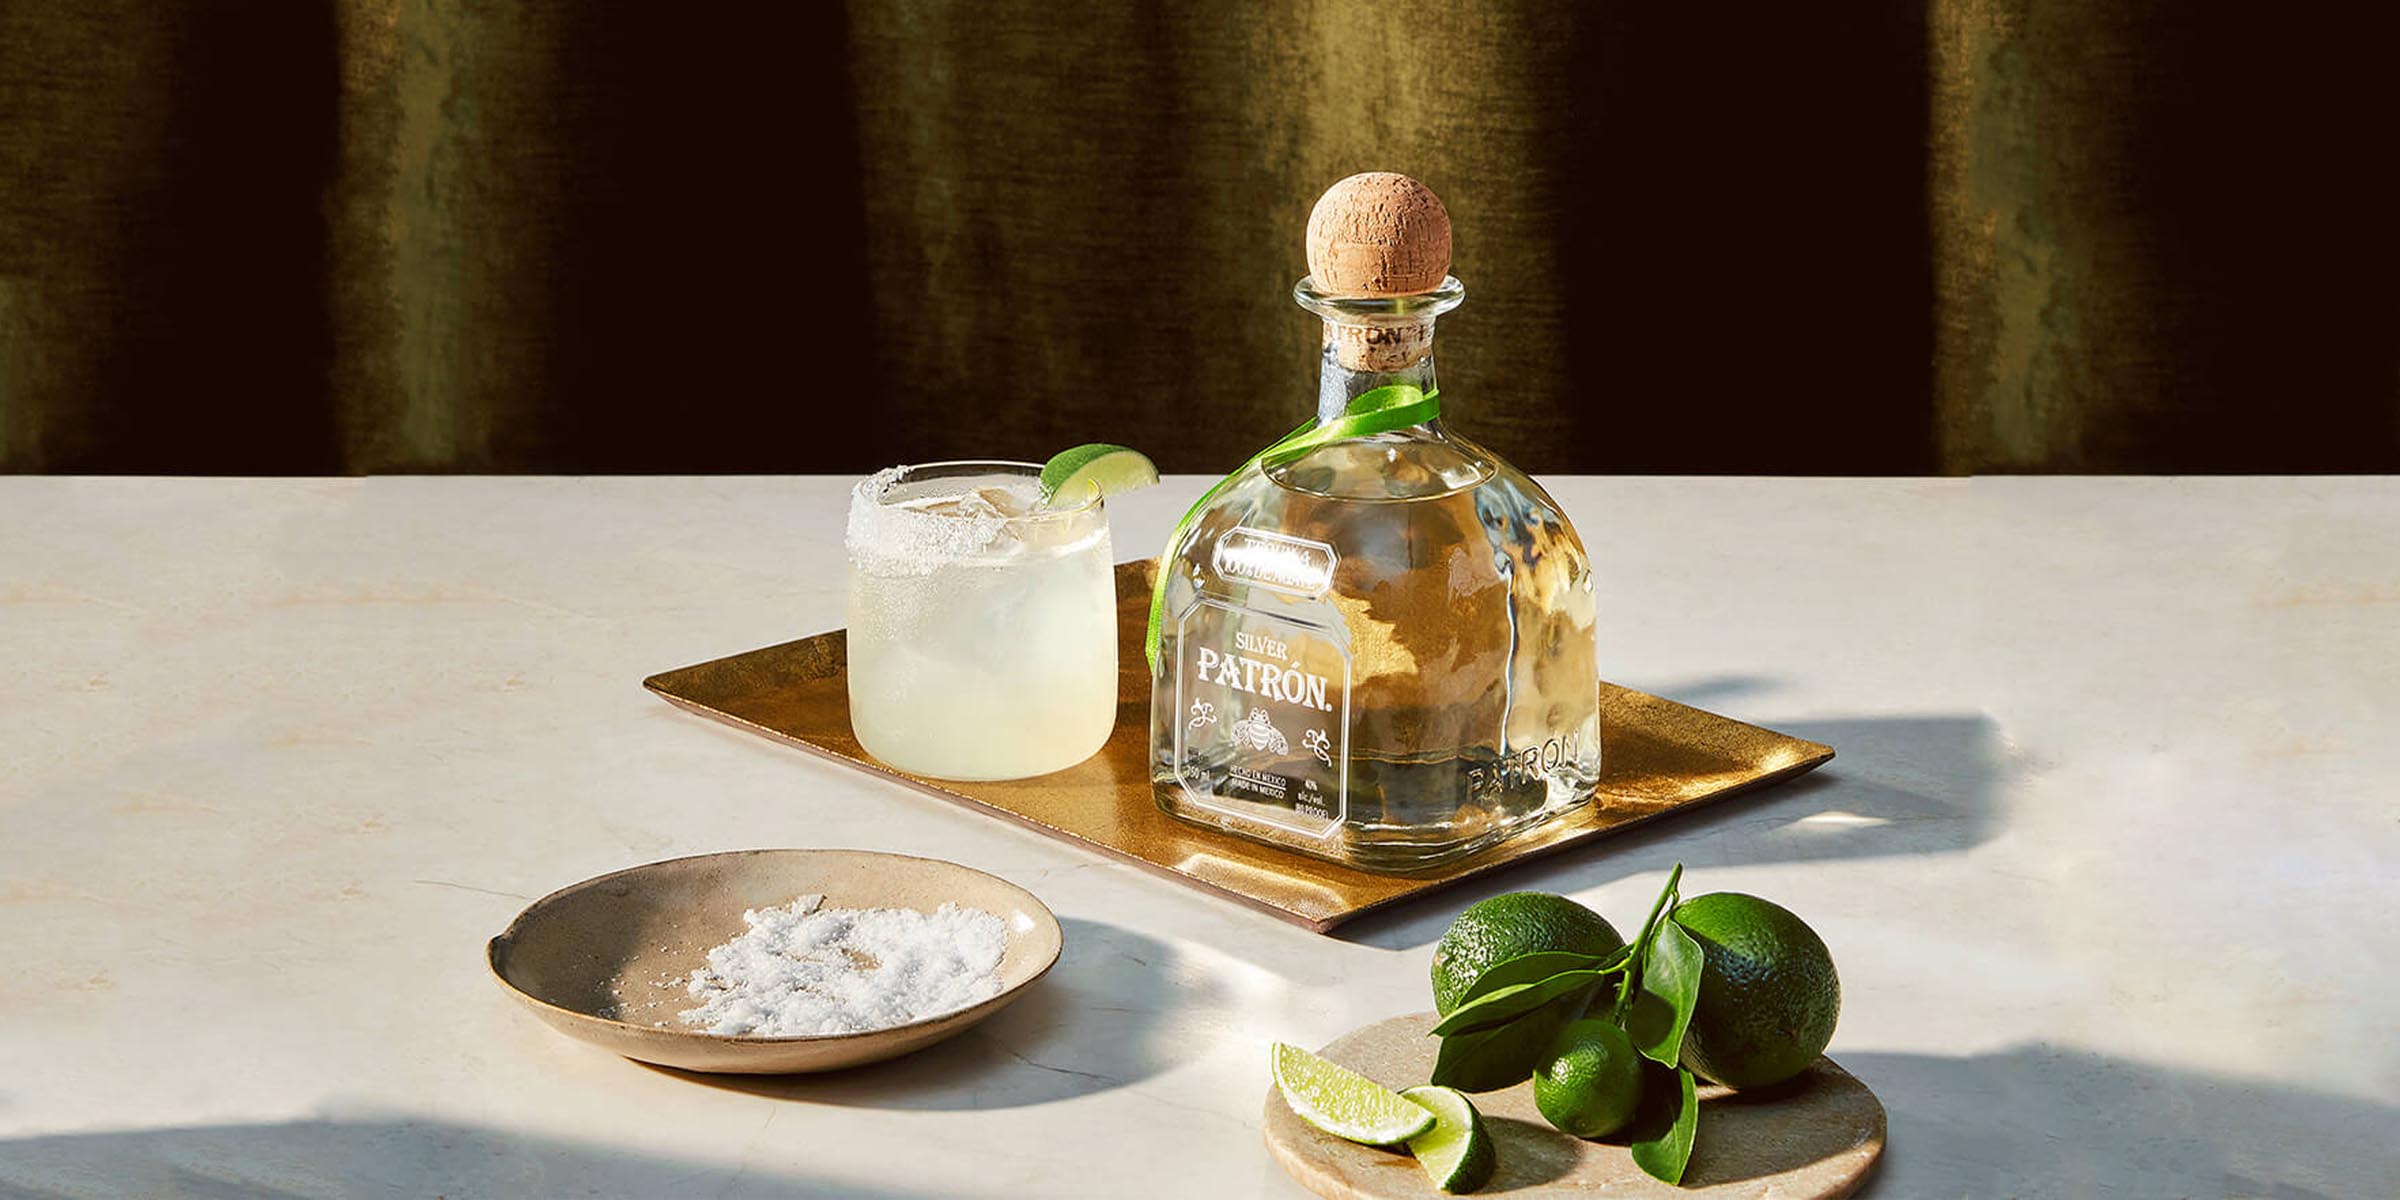 Attaining Perfection With Patrón’s Super Premium Tequila